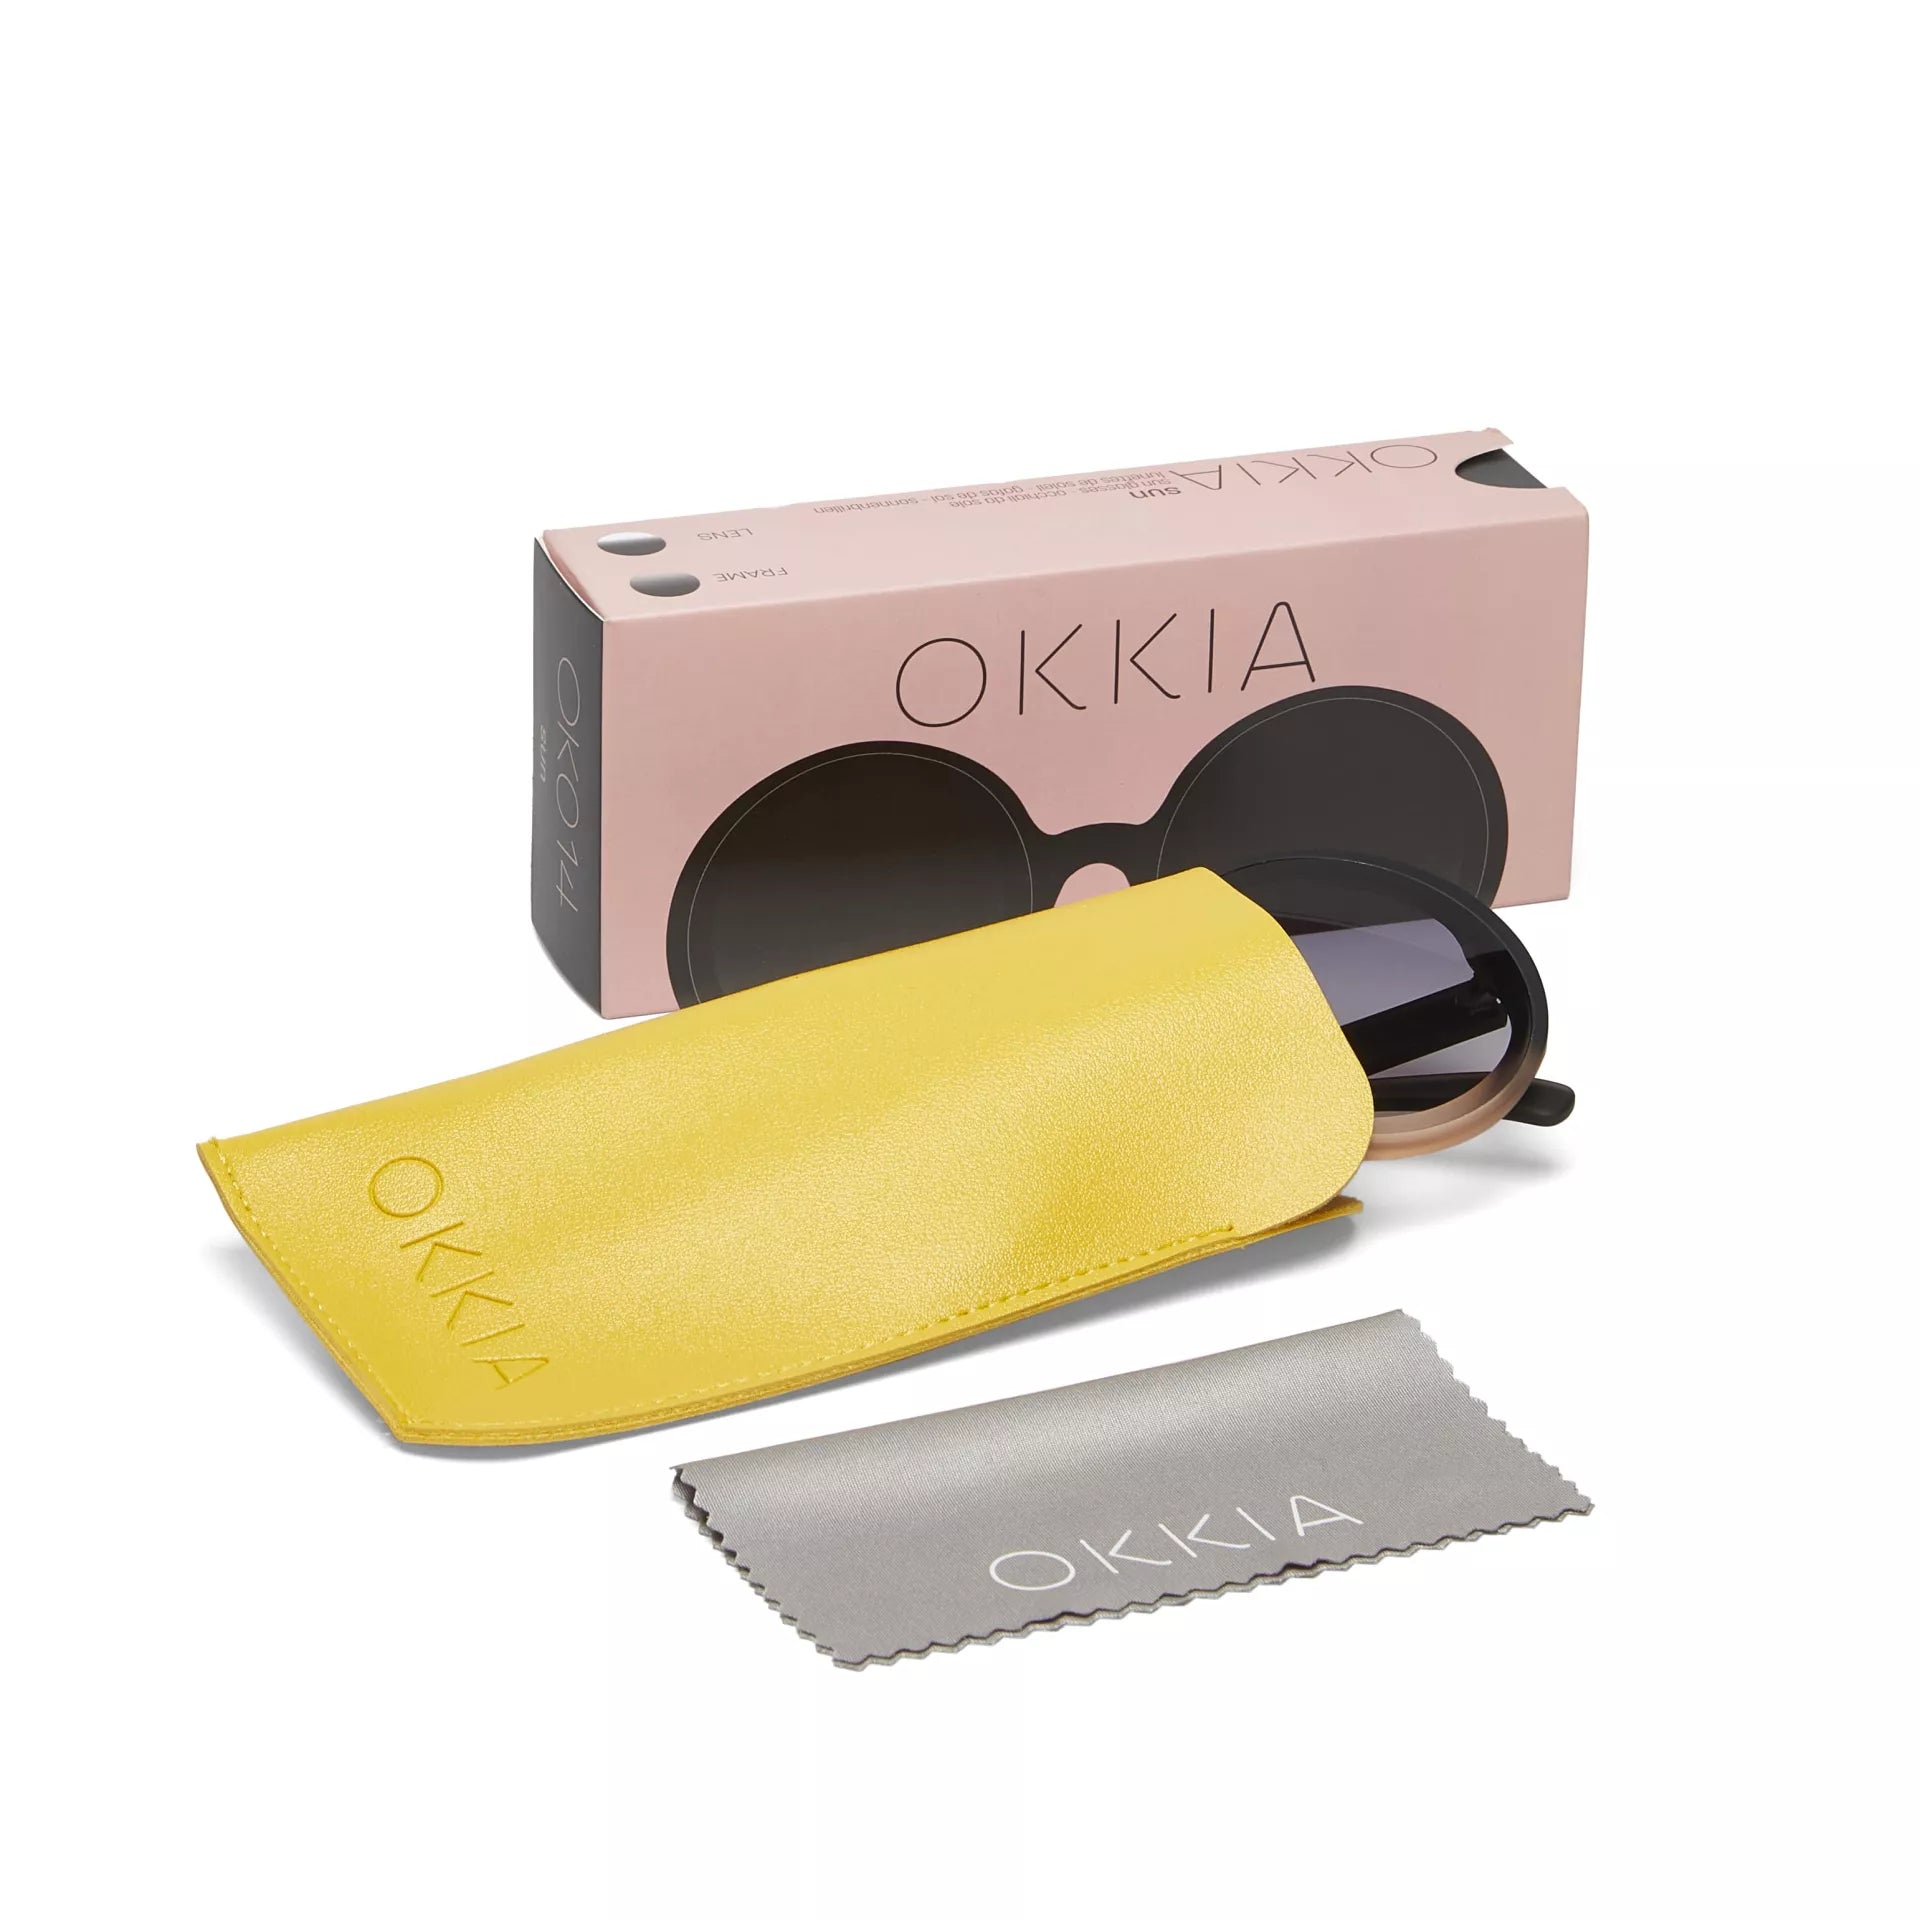 Fabulous Gifts Okkia Sunglasses Tondo Black Pink by Weirs of Baggot Street